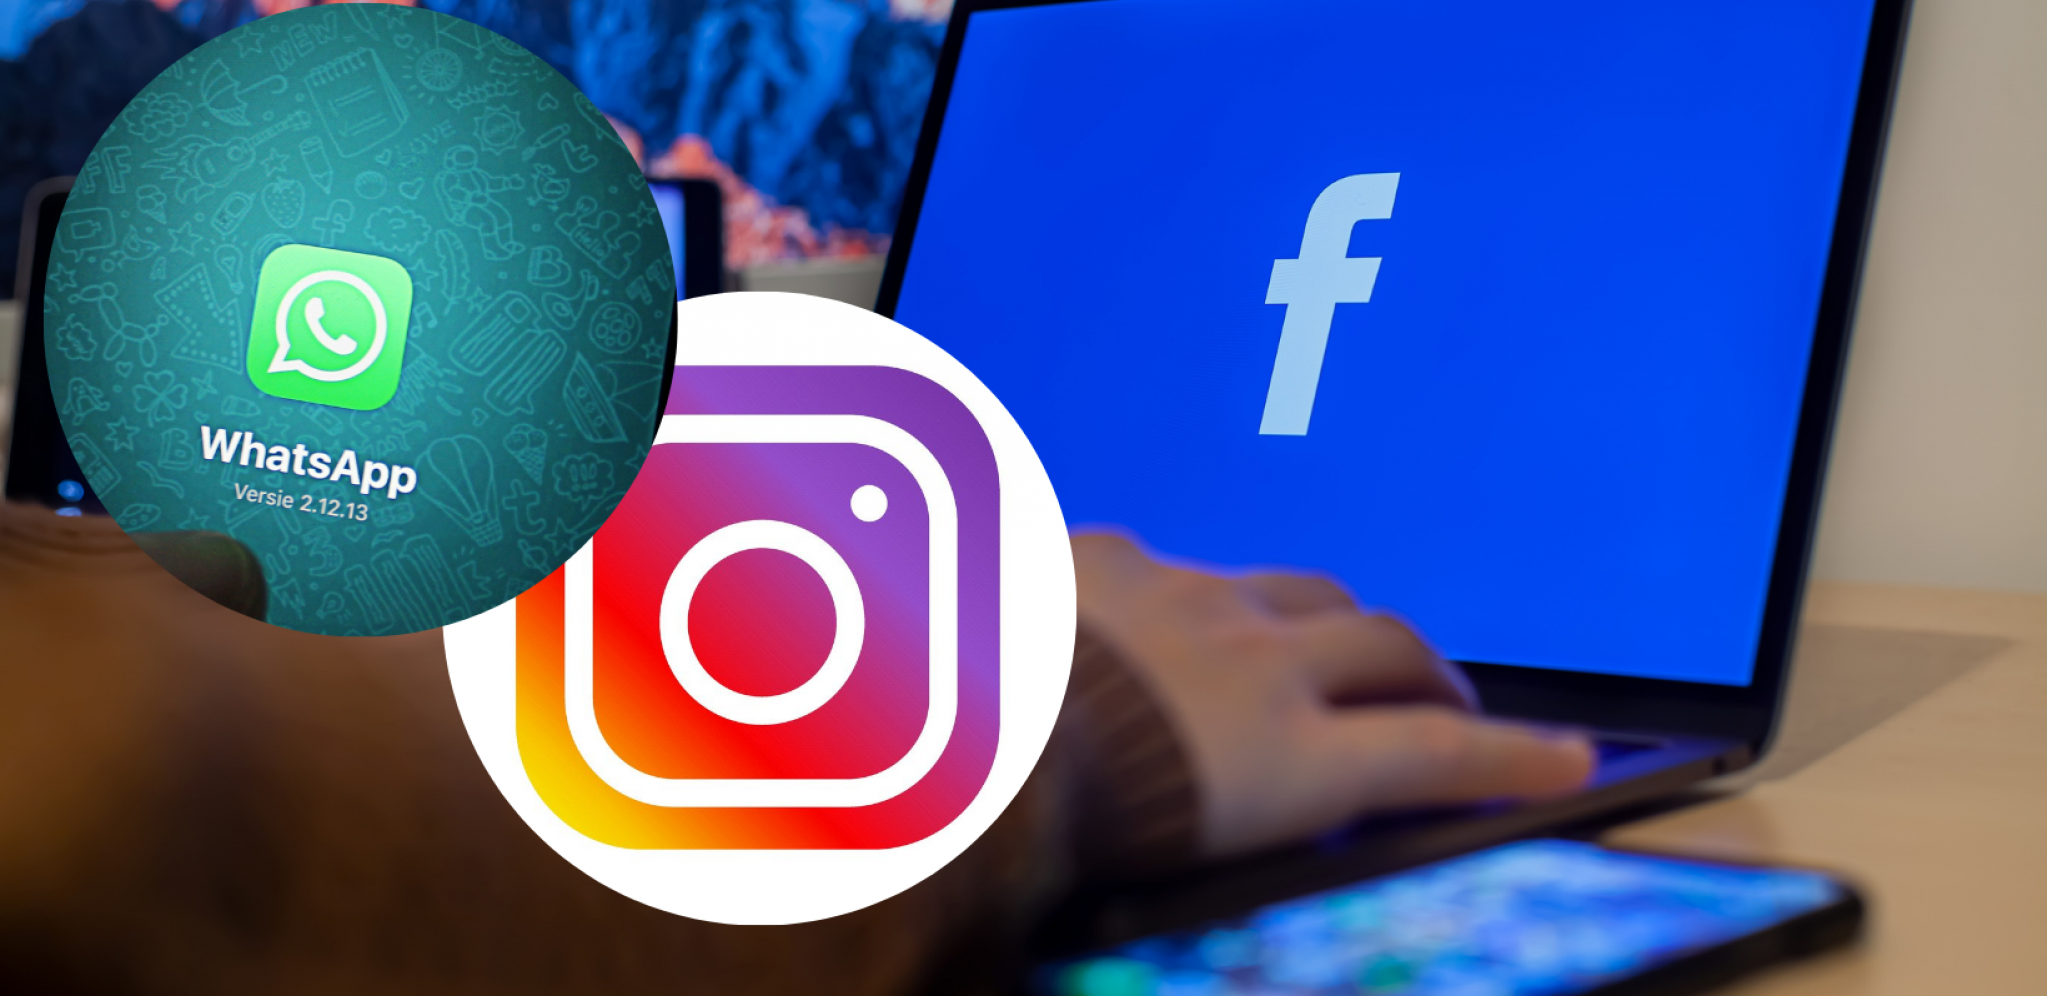 REŠILI PROBLEM Fejsbuk, Mesendžer, Instagram i Vacap ponovo rade